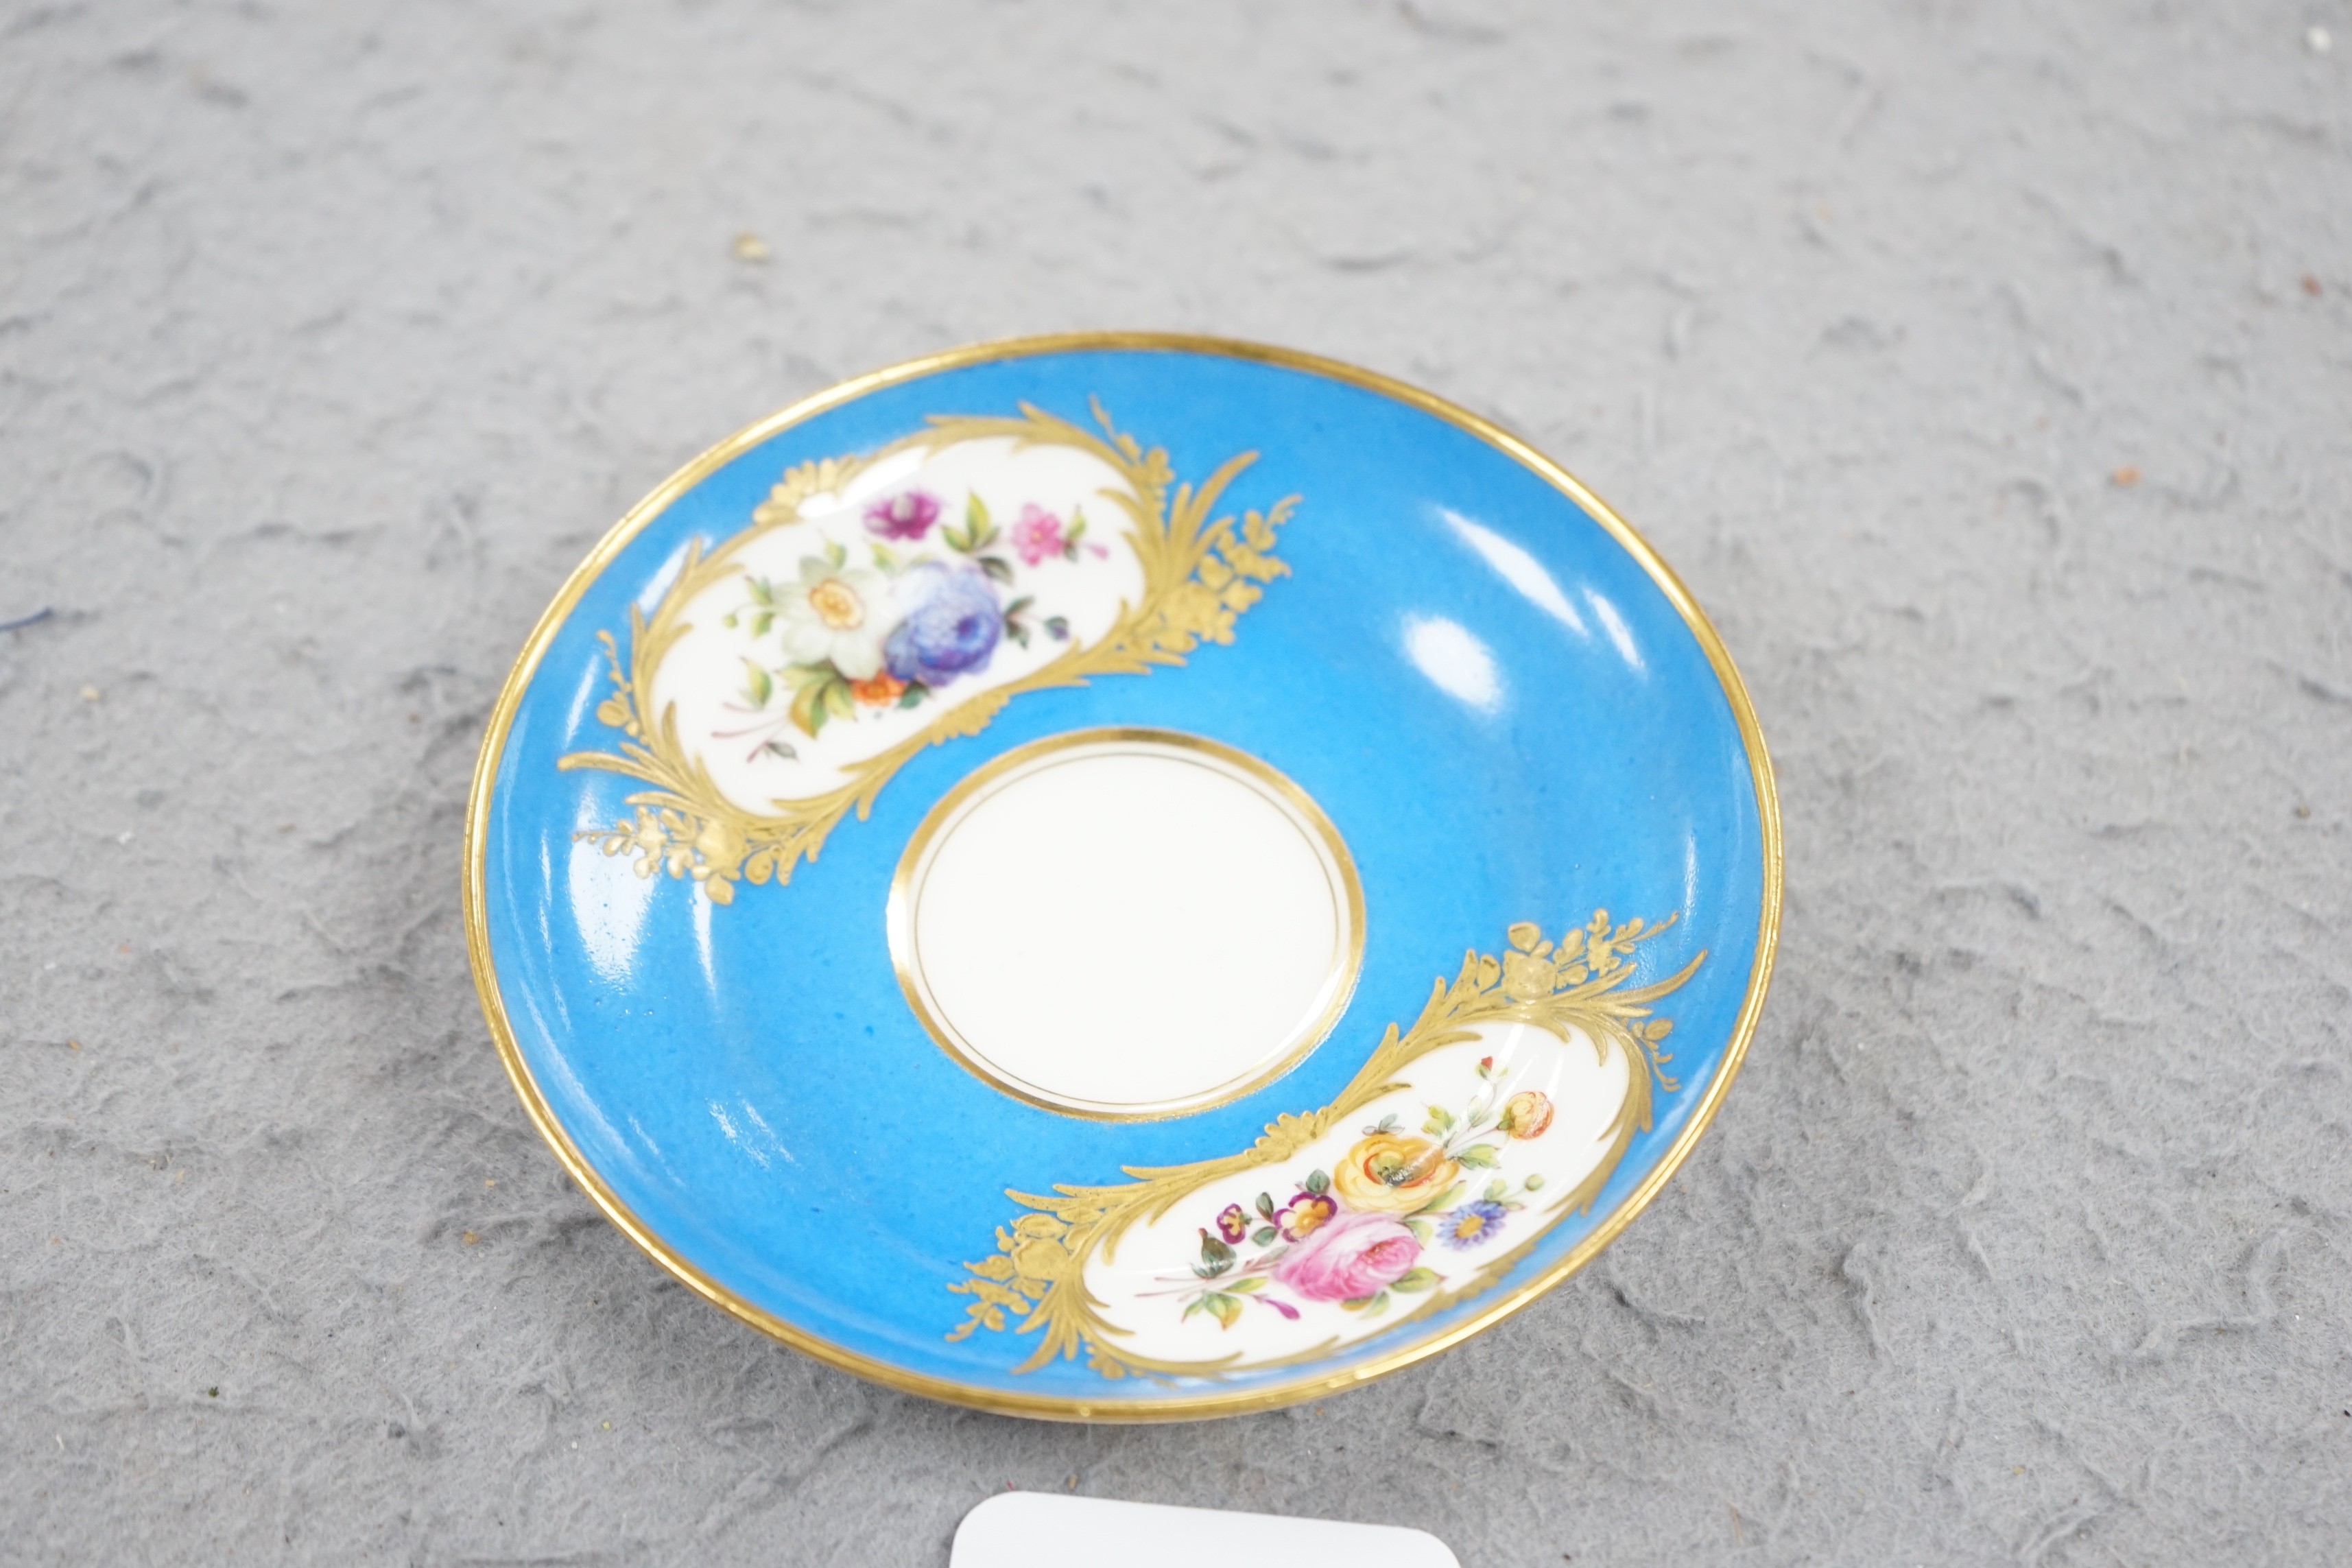 A Paris porcelain Sevres style cup and saucer